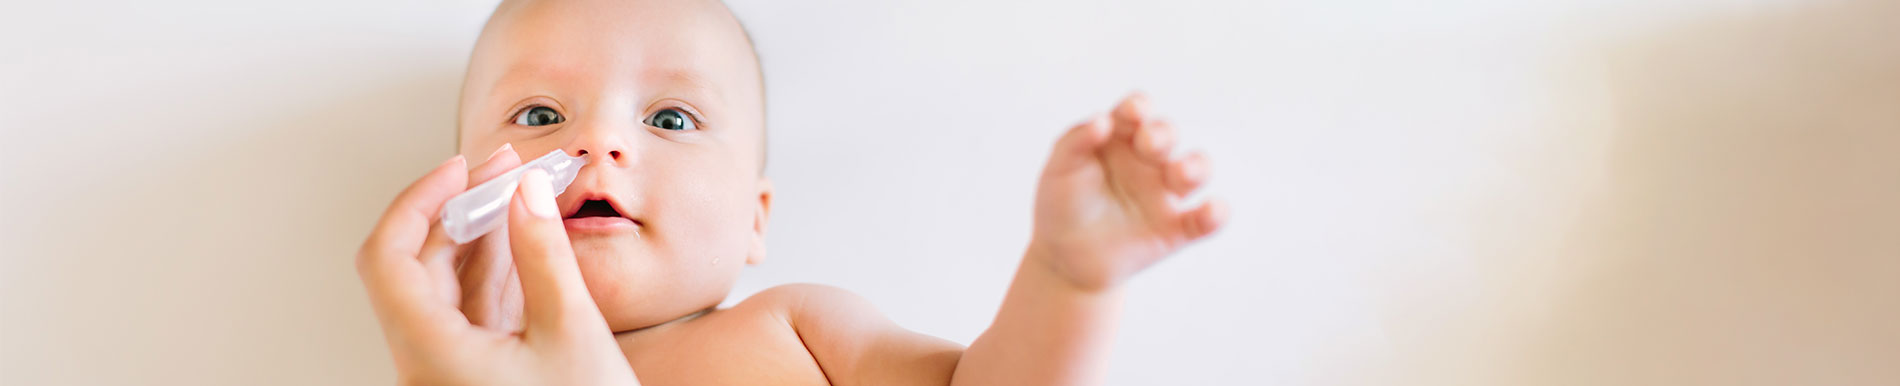 https://www.healthychildren.org/SiteCollectionImage-Homepage-Banners/stuffy-nose-baby-banner.jpg